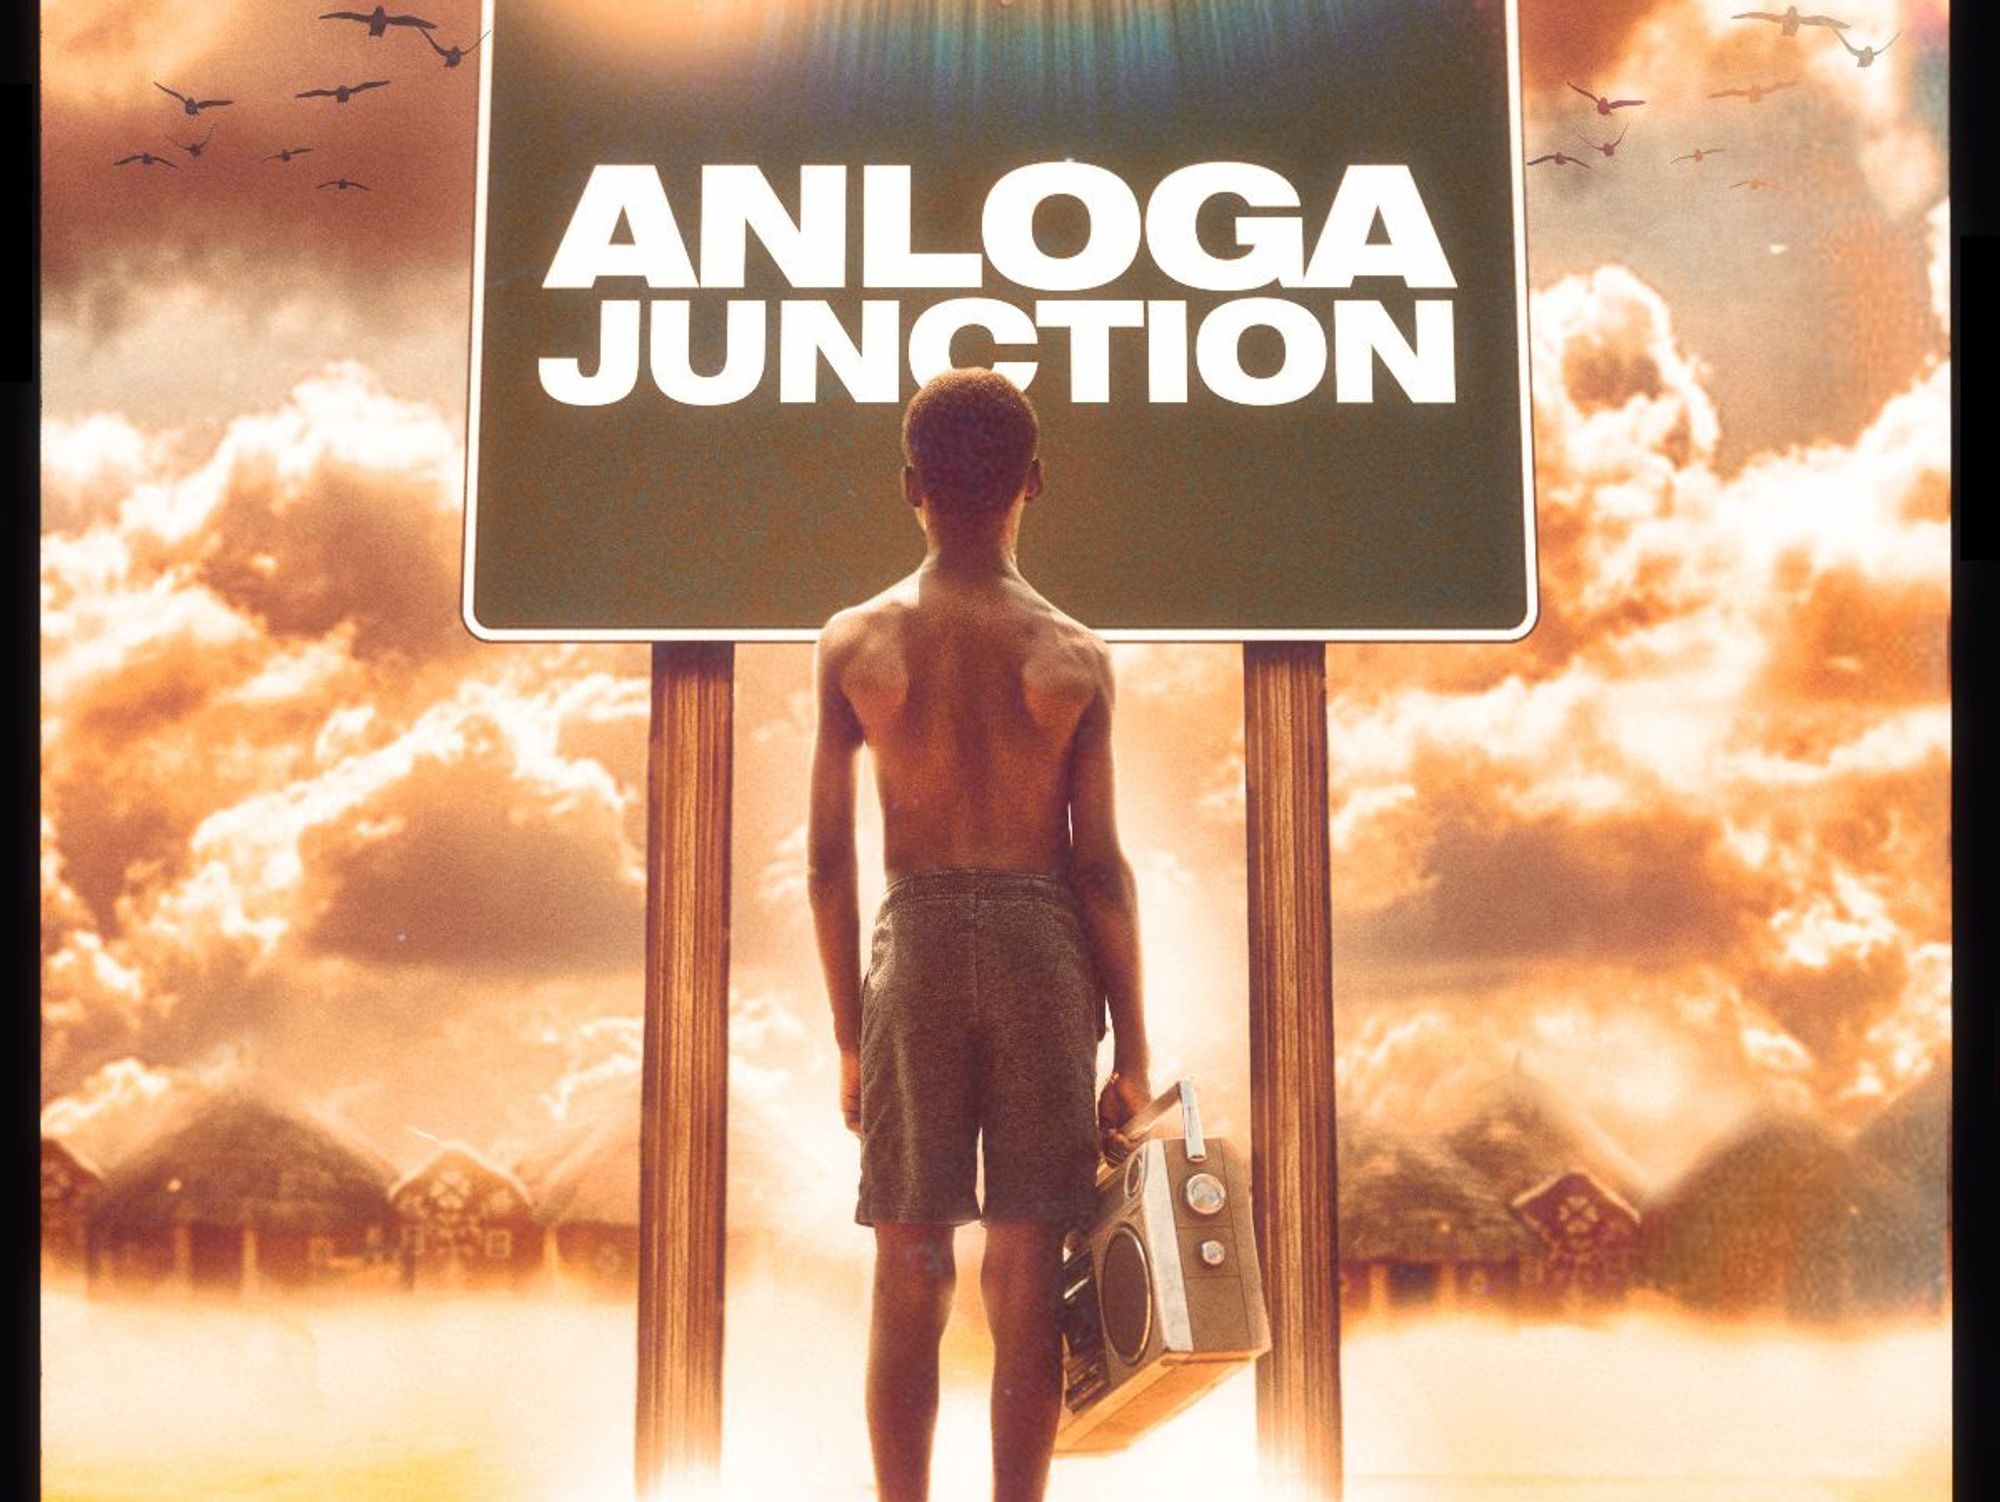 Listen to Stonebwoy's New Album 'Anloga Junction'